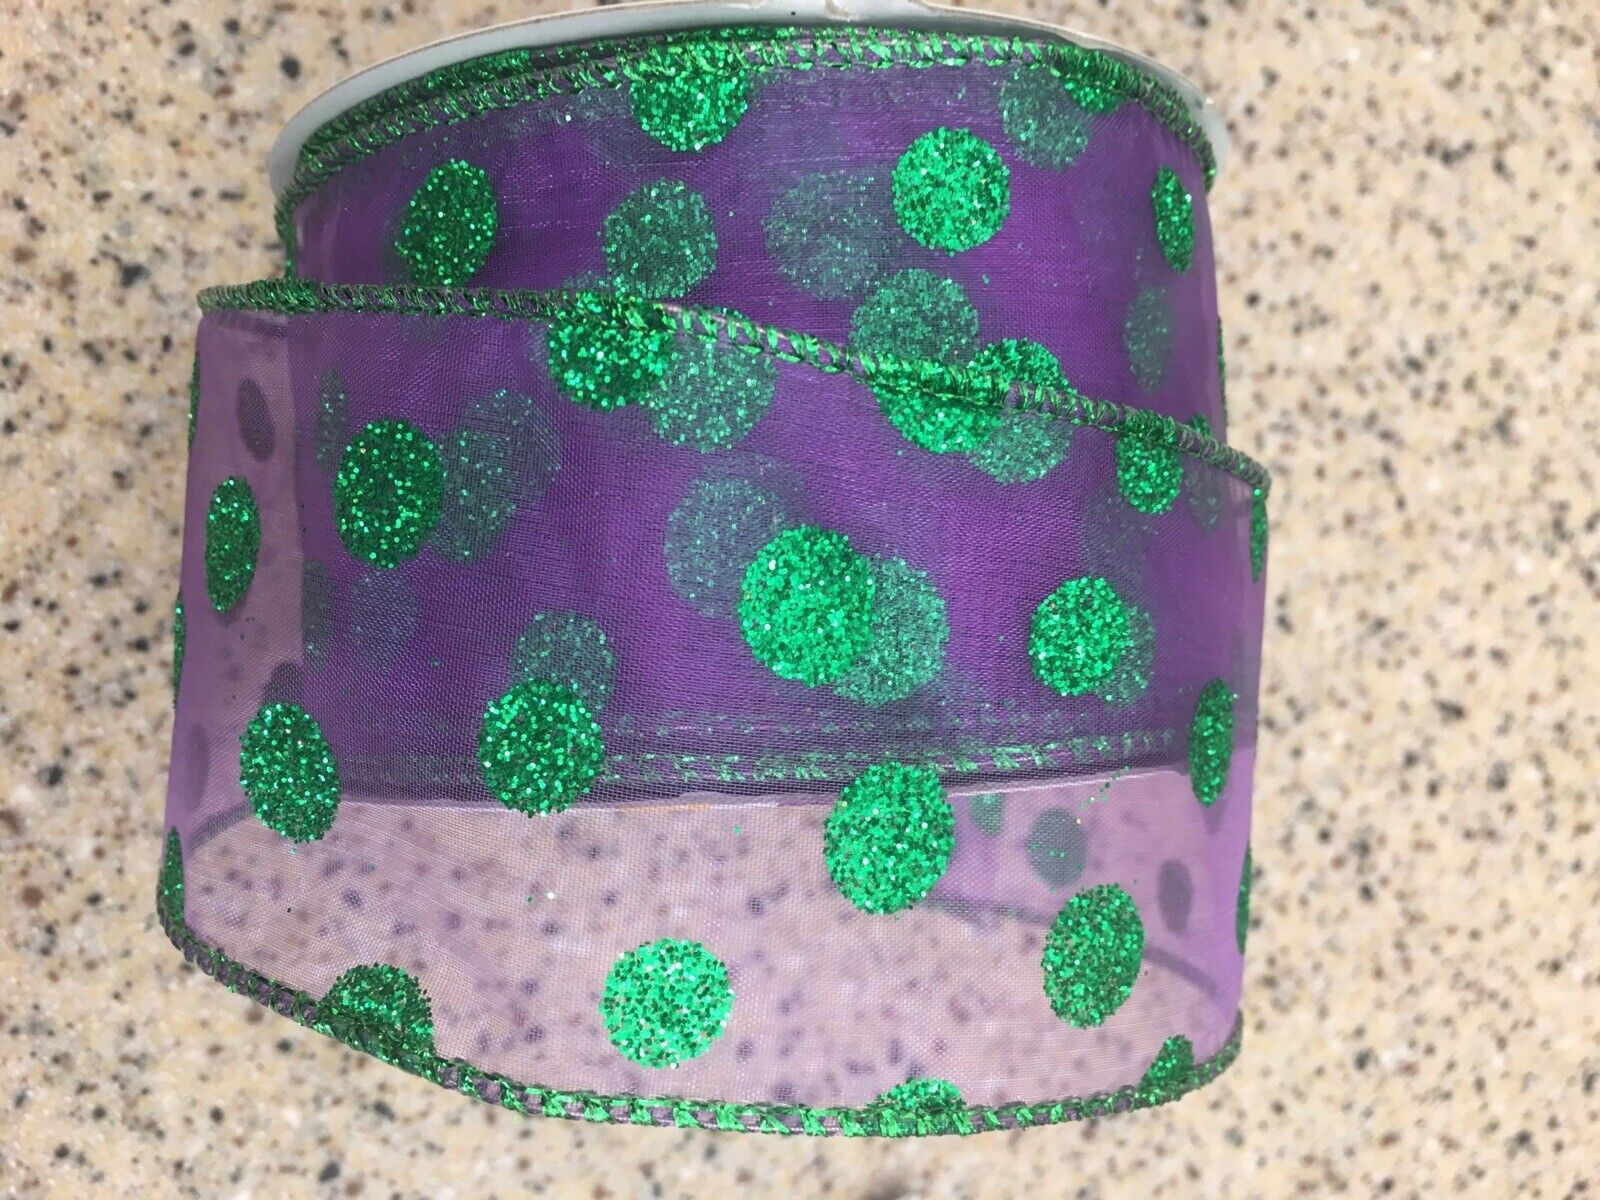 25 Yards Festive Glitter Green Purple Polka Dot Decorative Wired Ribbon FUN New